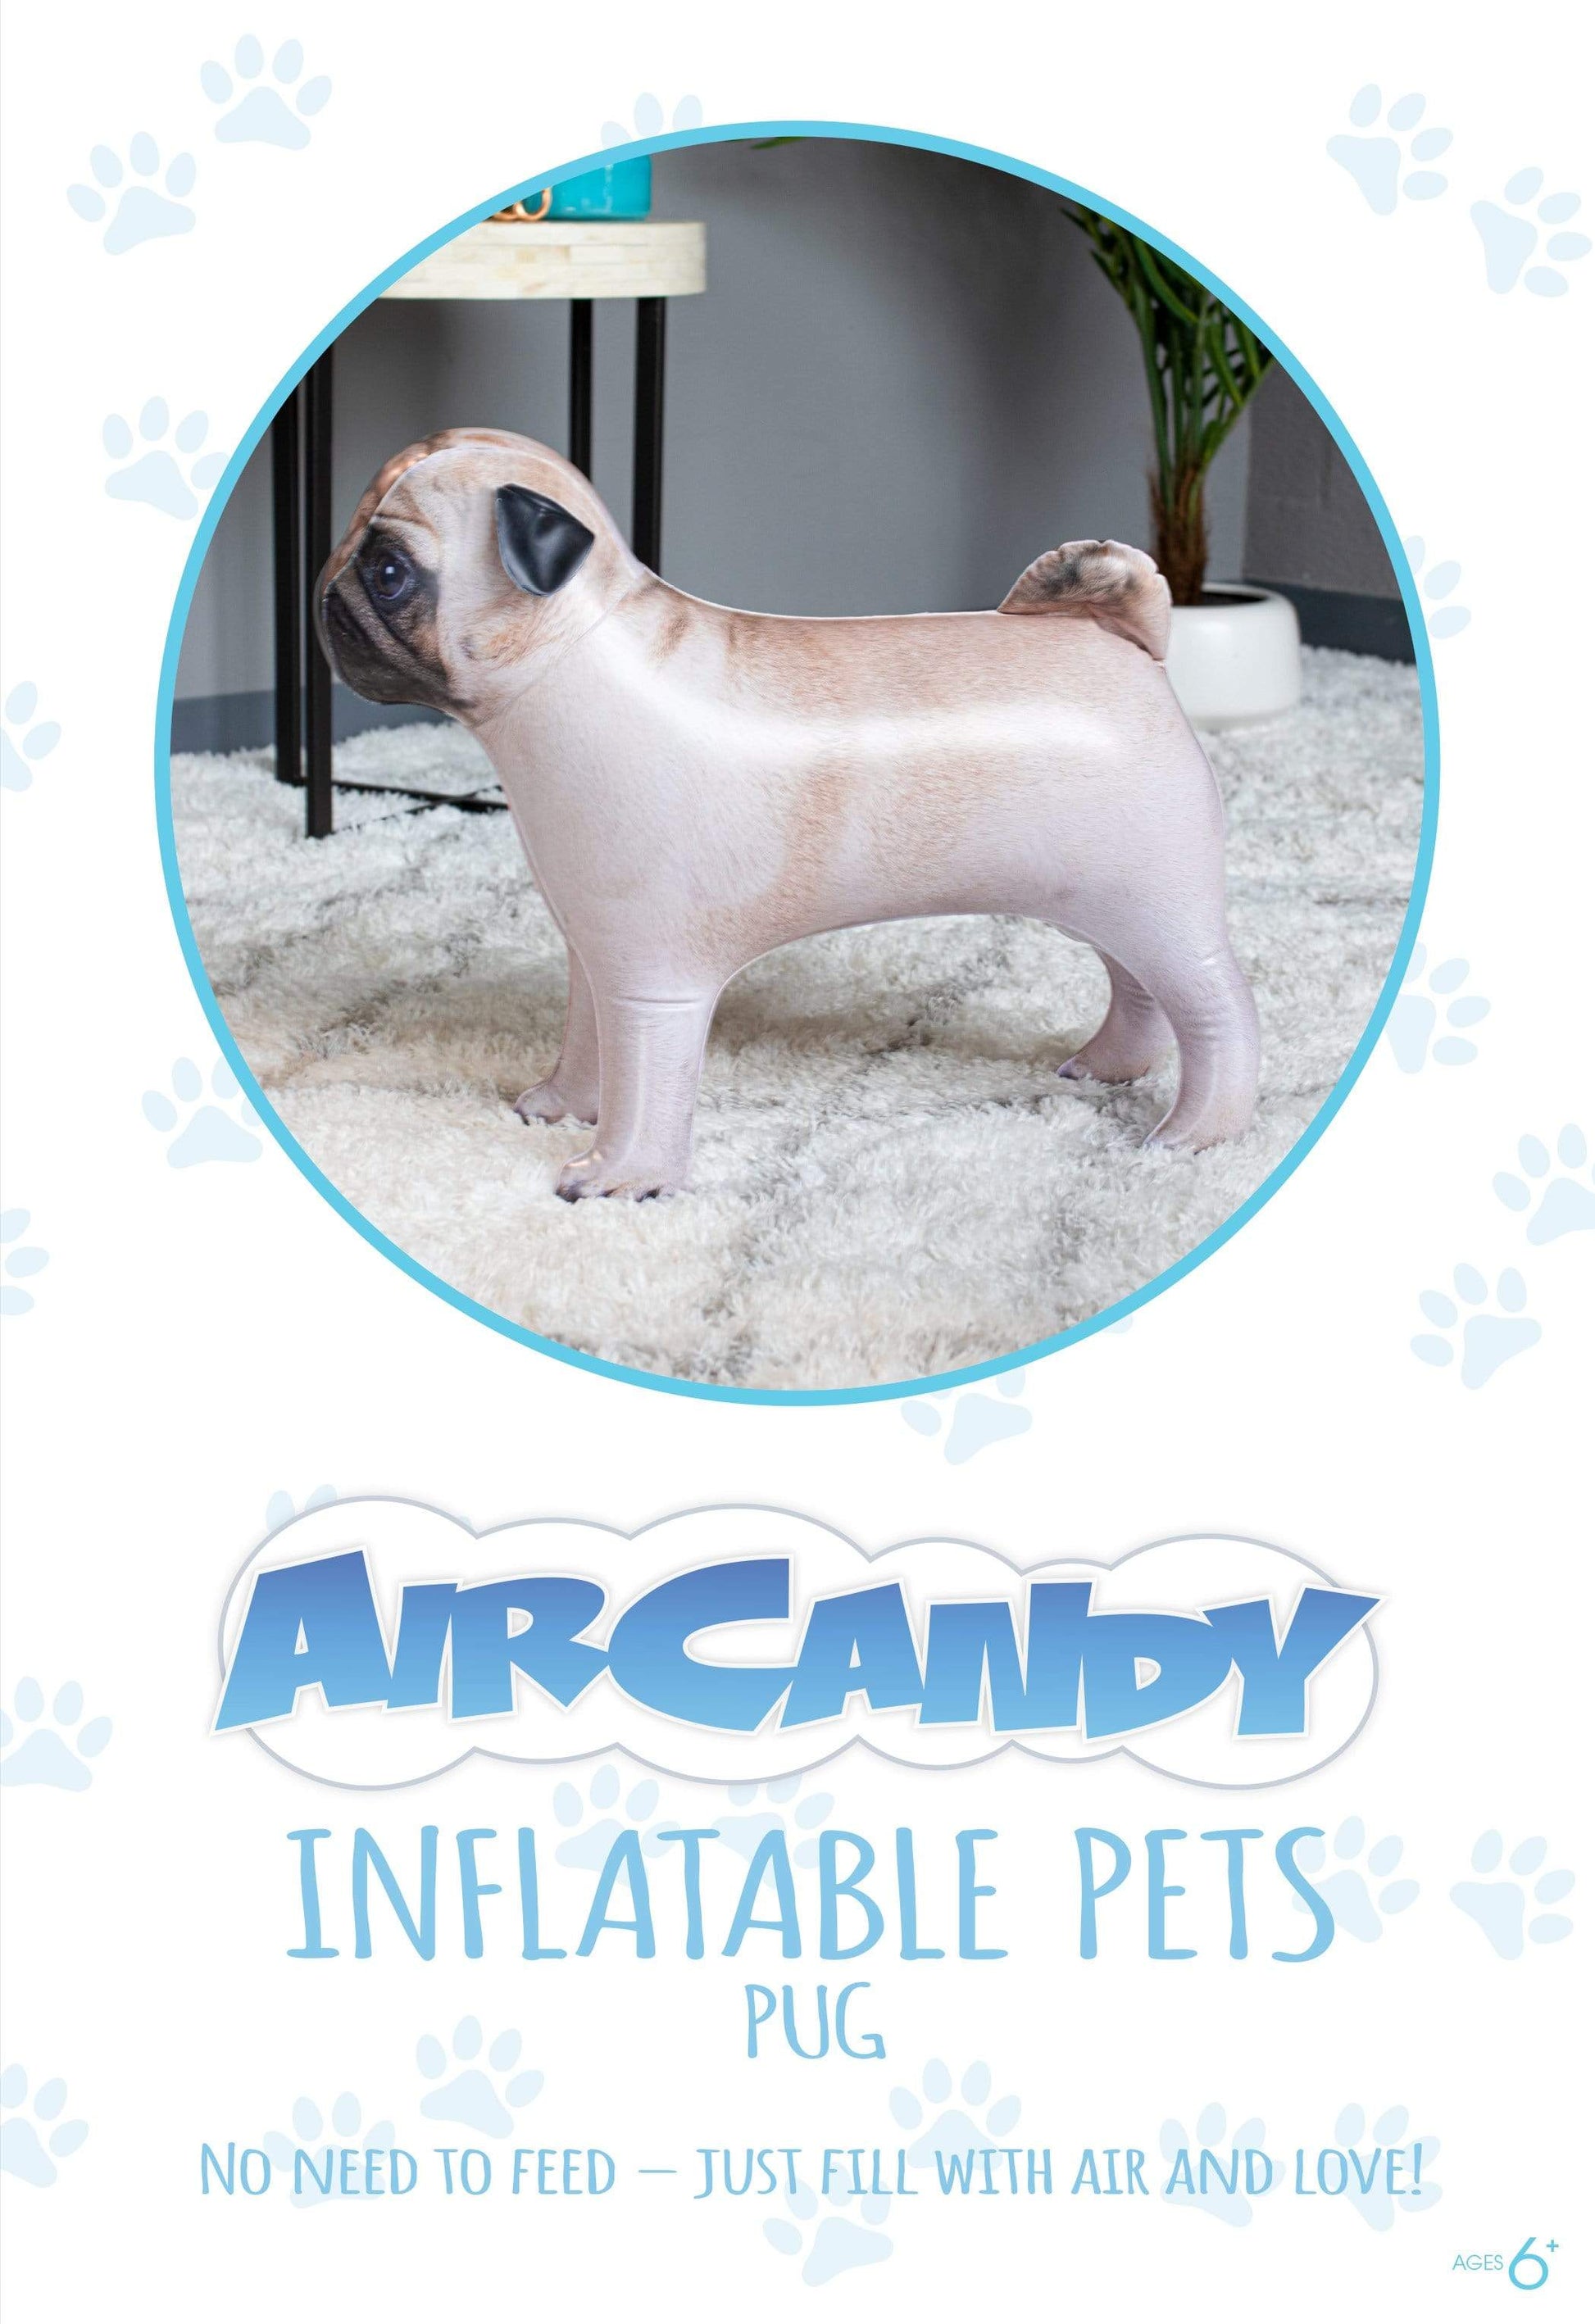 Inflatable Dog Pug the perfect pet AirCandy